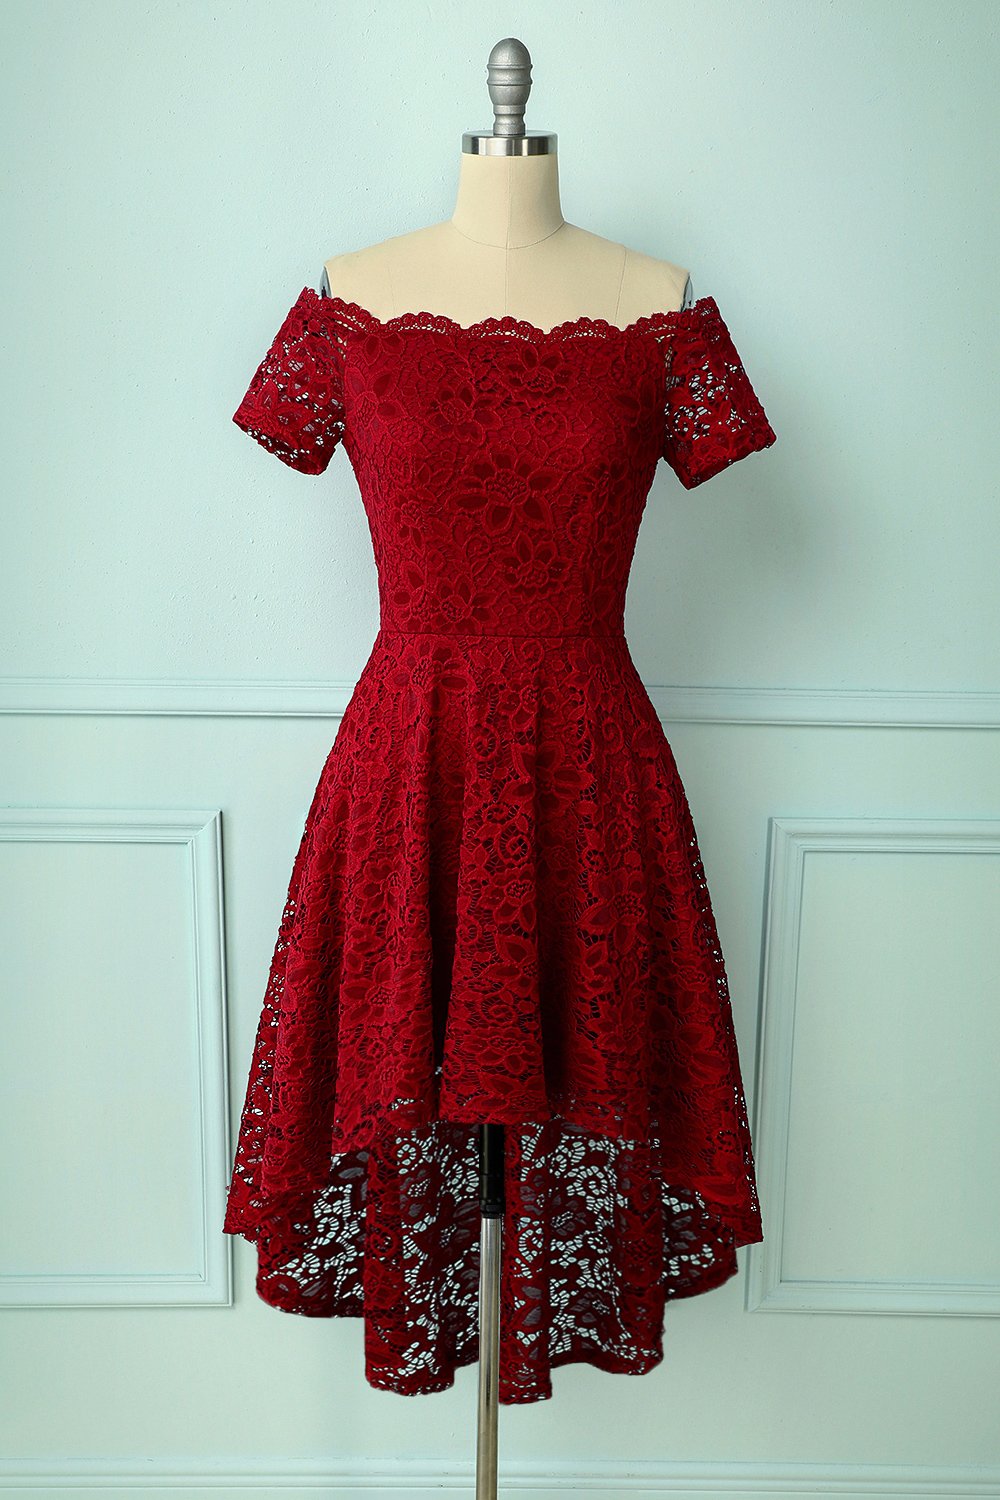 Burgundy Asymmetrical Lace Dress